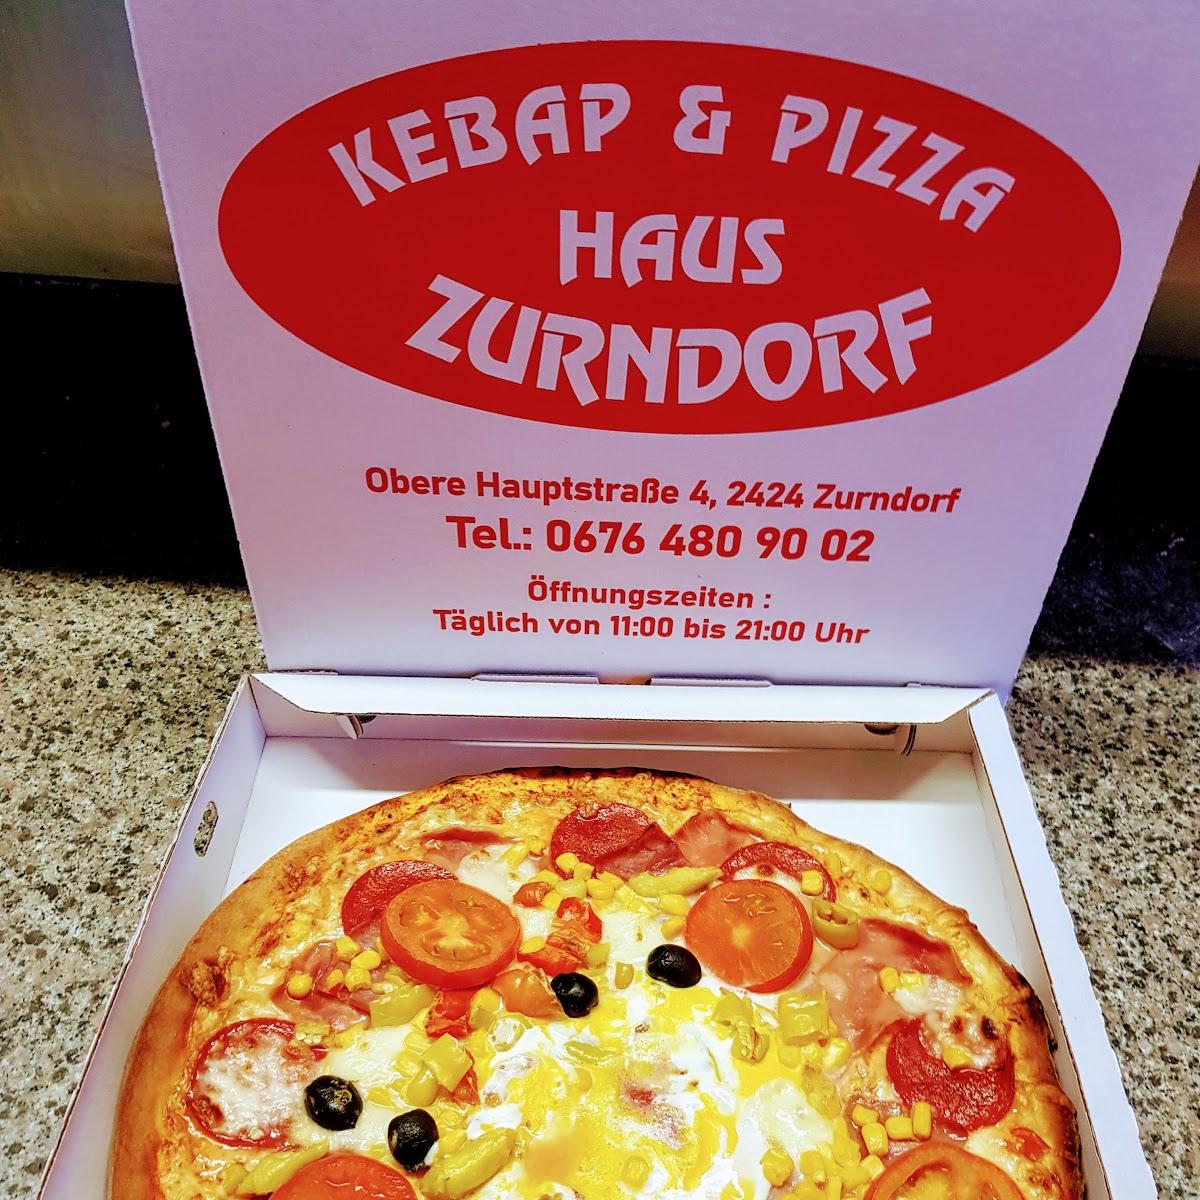 Restaurant "er Kebap & Pizzahouse" in Zurndorf